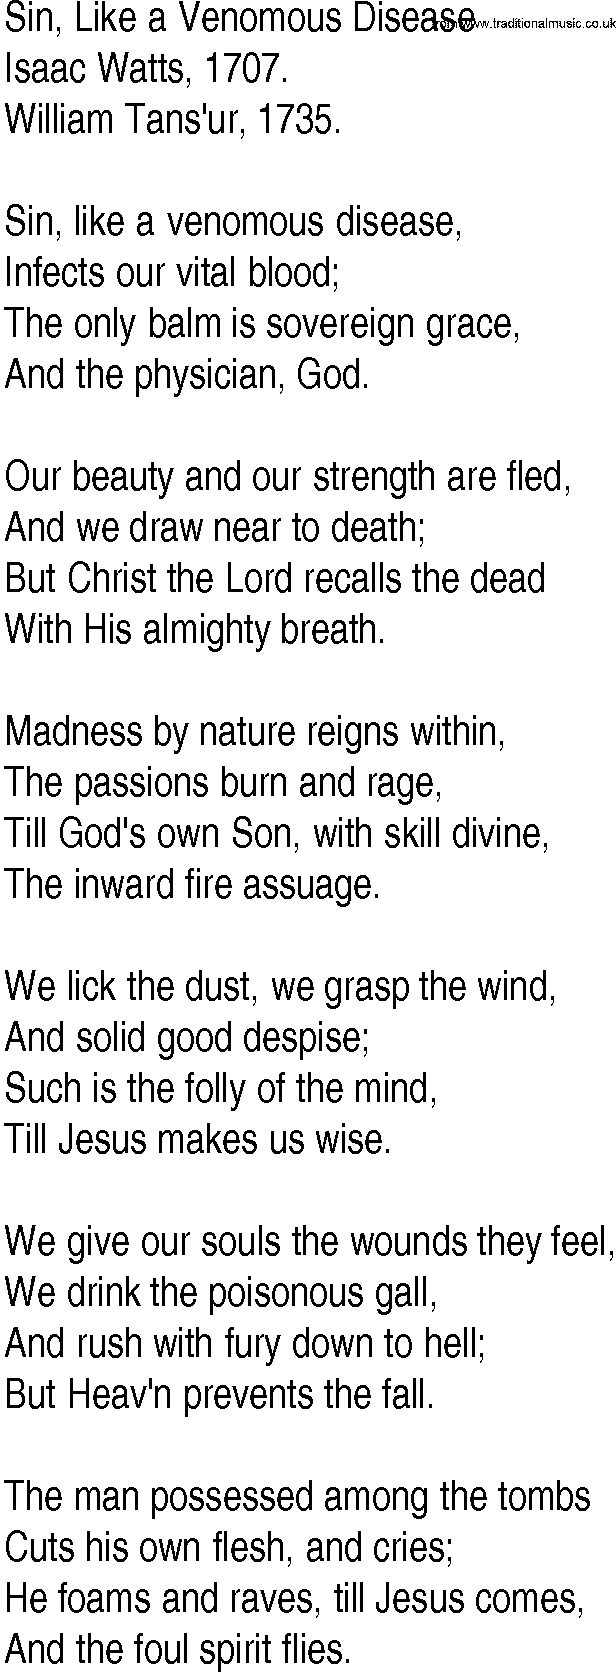 Hymn and Gospel Song: Sin, Like a Venomous Disease by Isaac Watts lyrics